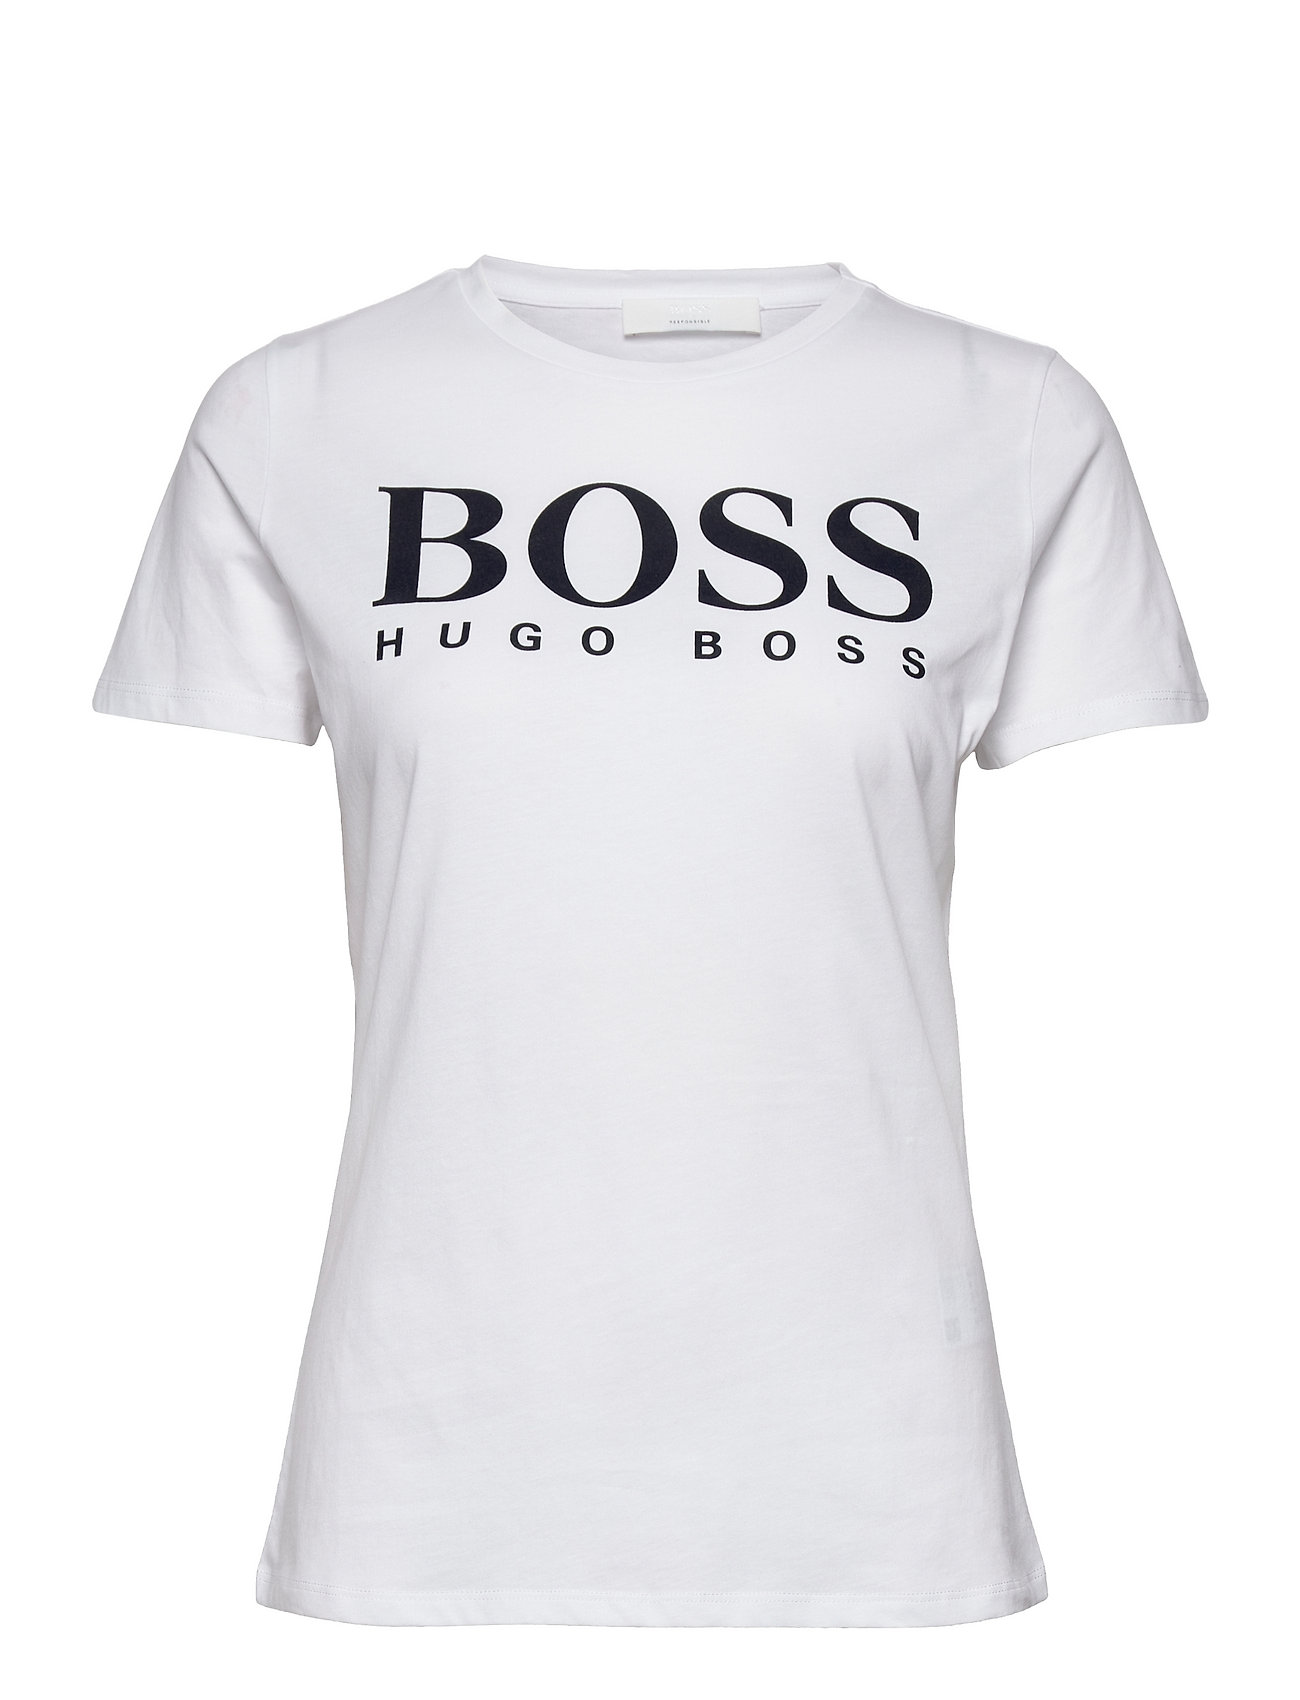 tro slutningen flåde BOSS t-shirts & toppe – C_elogo3 T-shirt Top Hvid BOSS til dame i Blå -  Pashion.dk